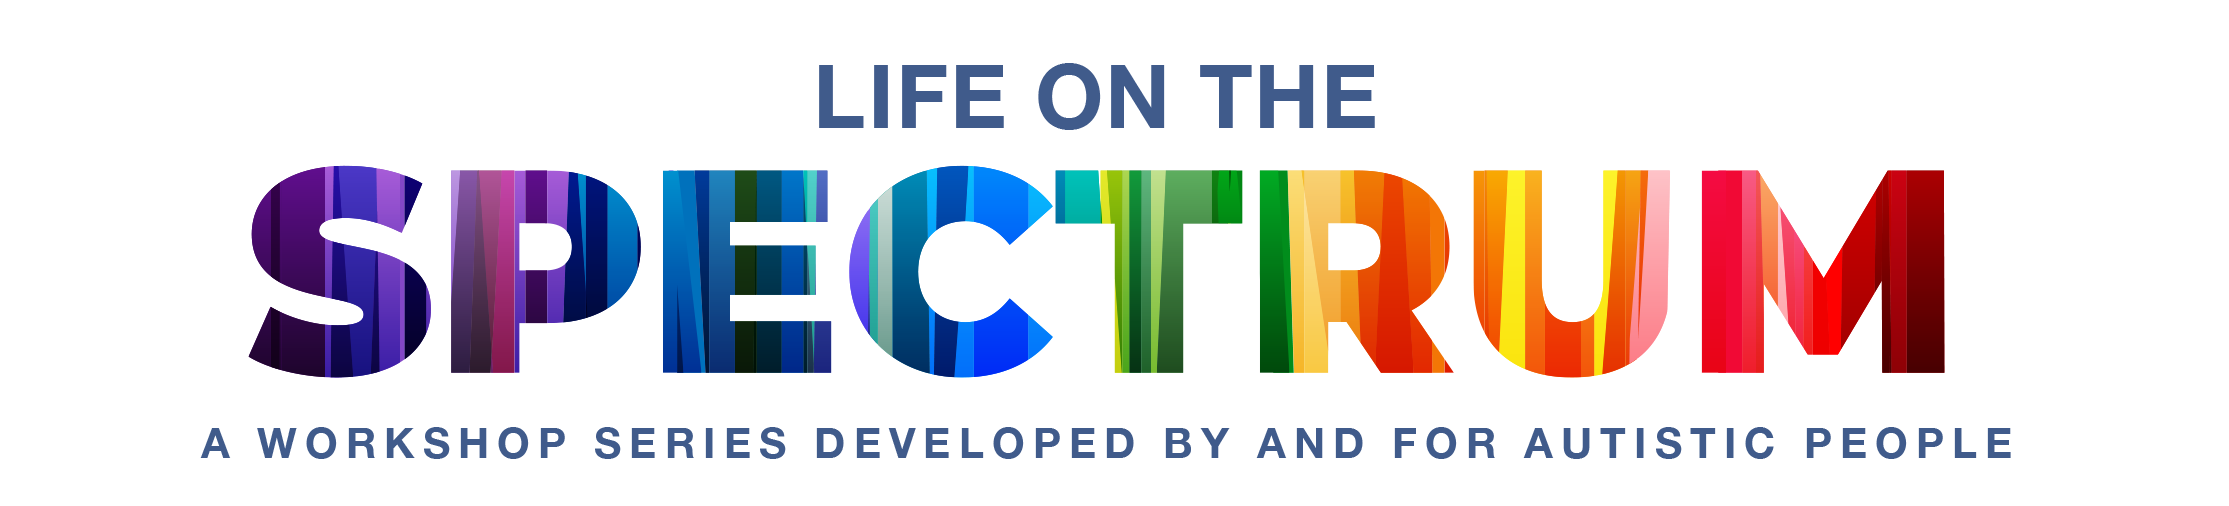 Life On The Spectrum_logo